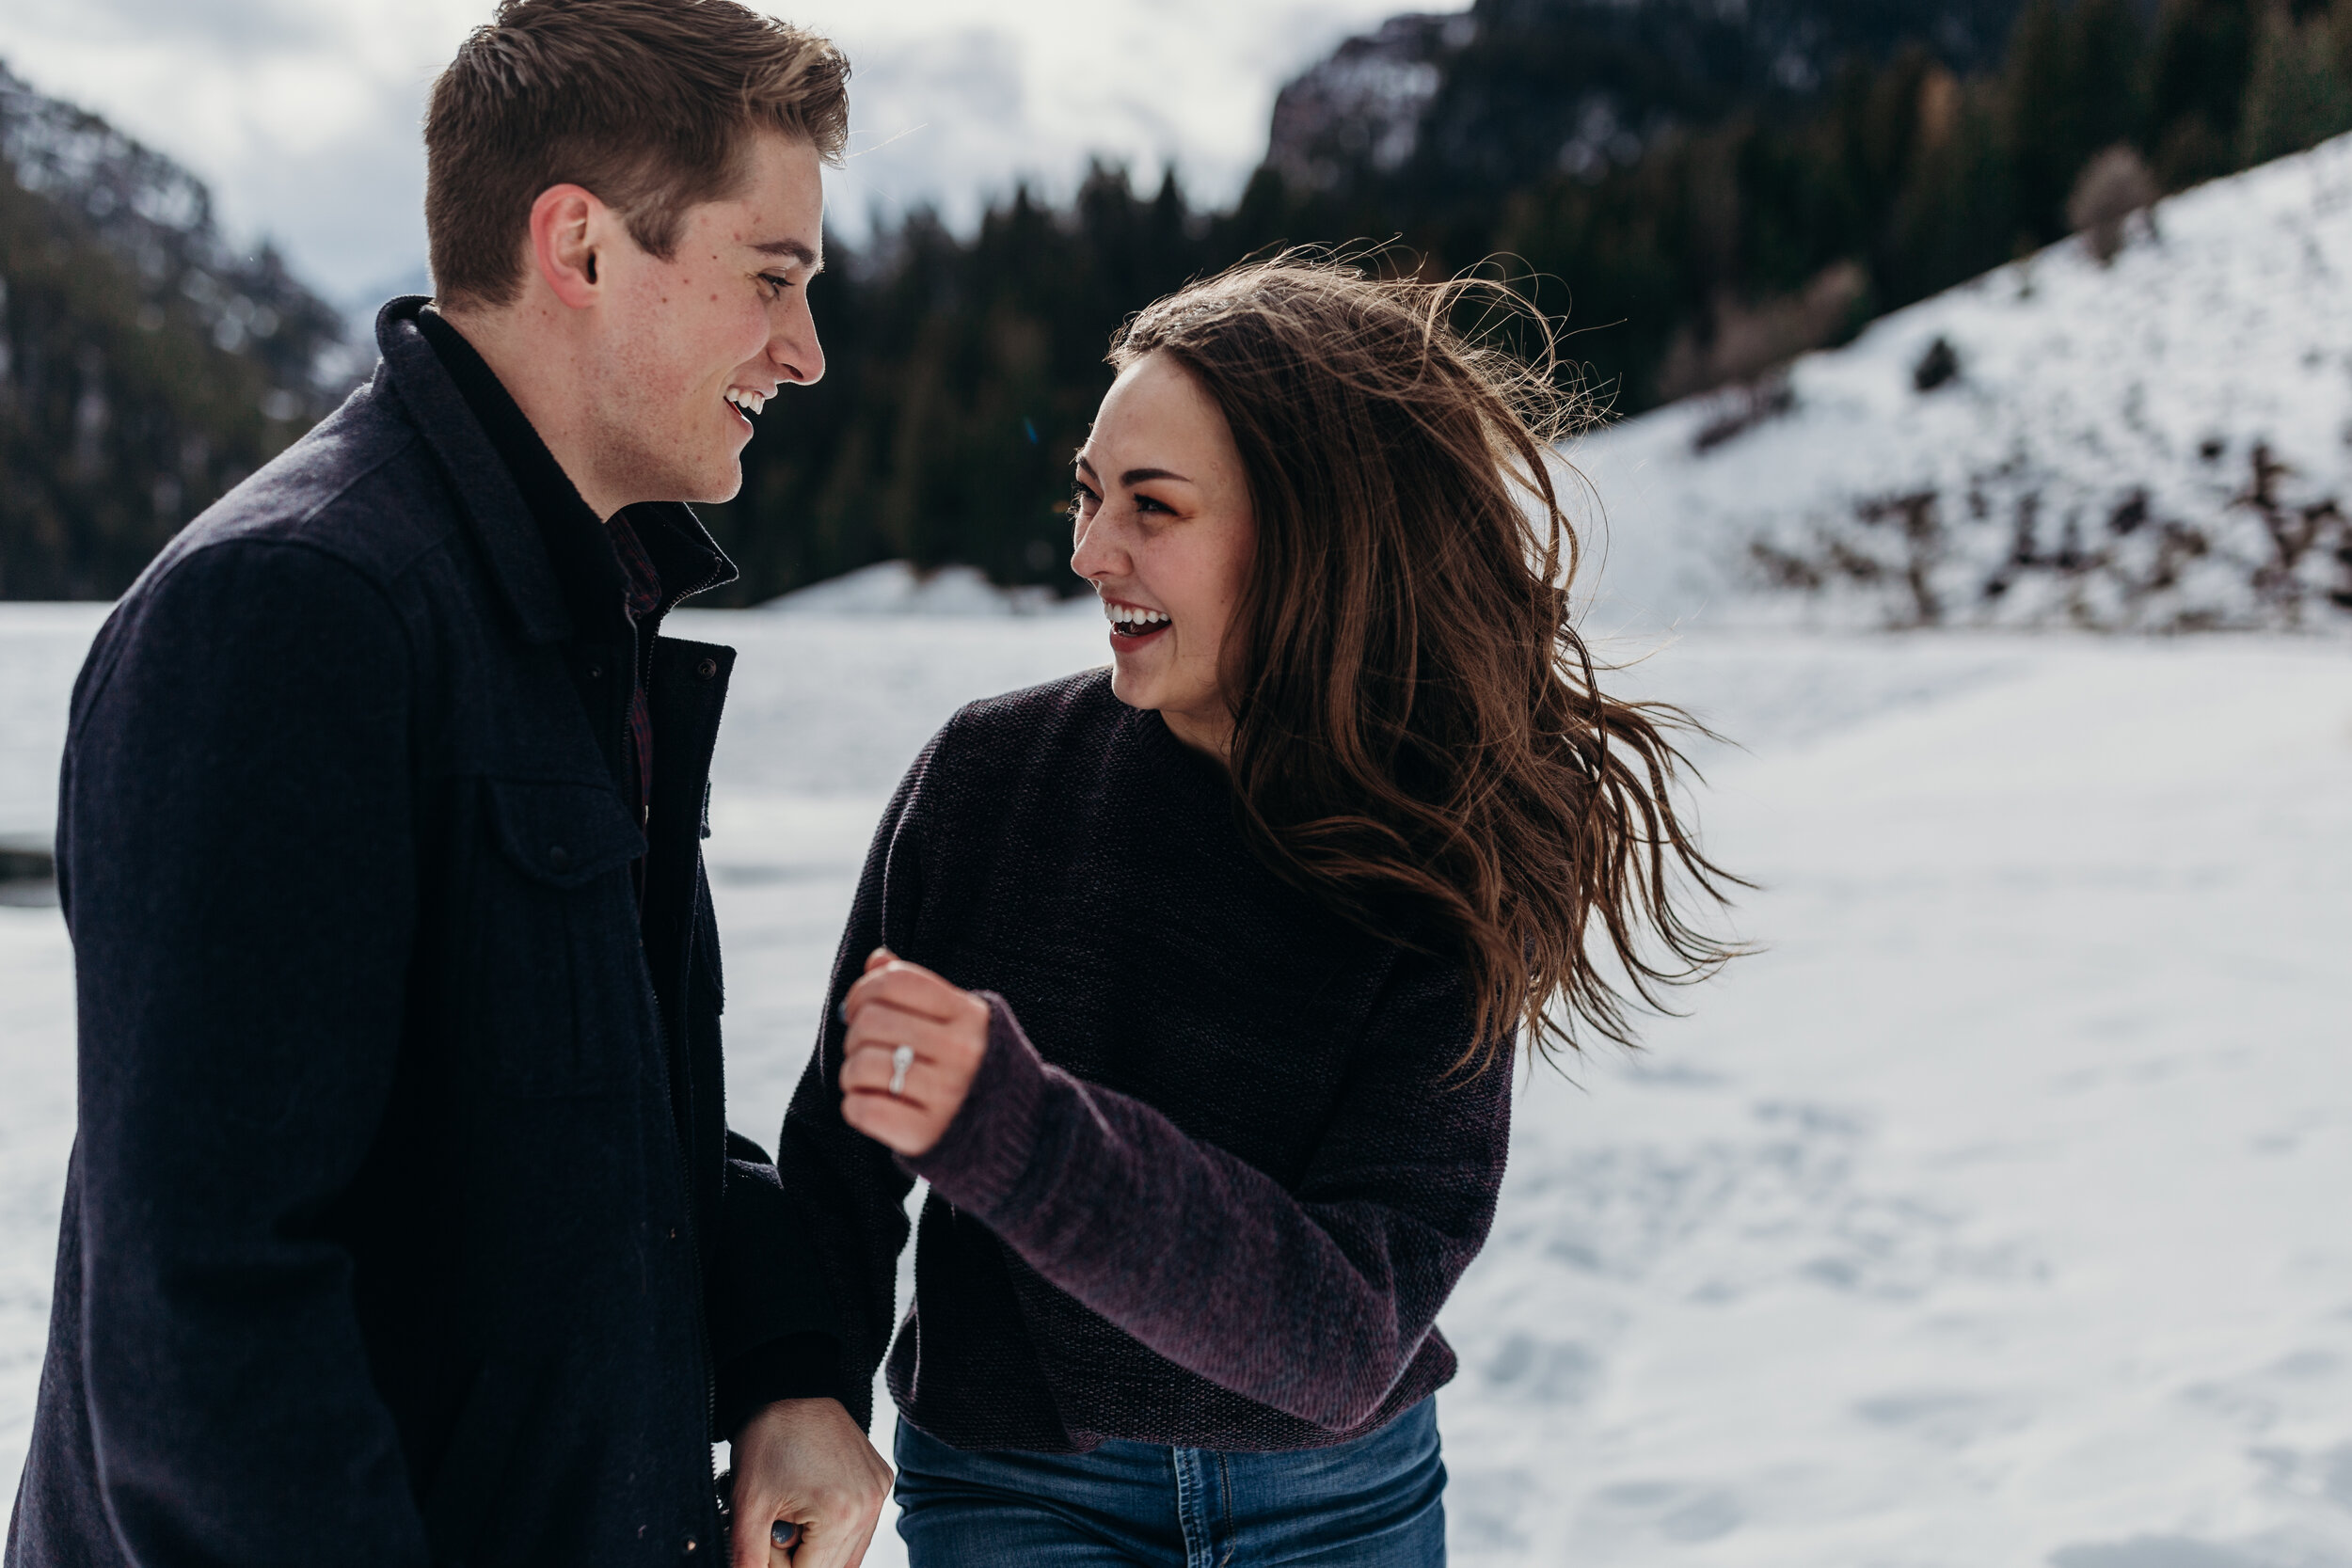 Playful snowy winter mountain engagements windy hair pine trees laughing couple shoot #coupleshoot #utahphotographer #weddingphotographer #engagements #engagementshoot #winterengagements